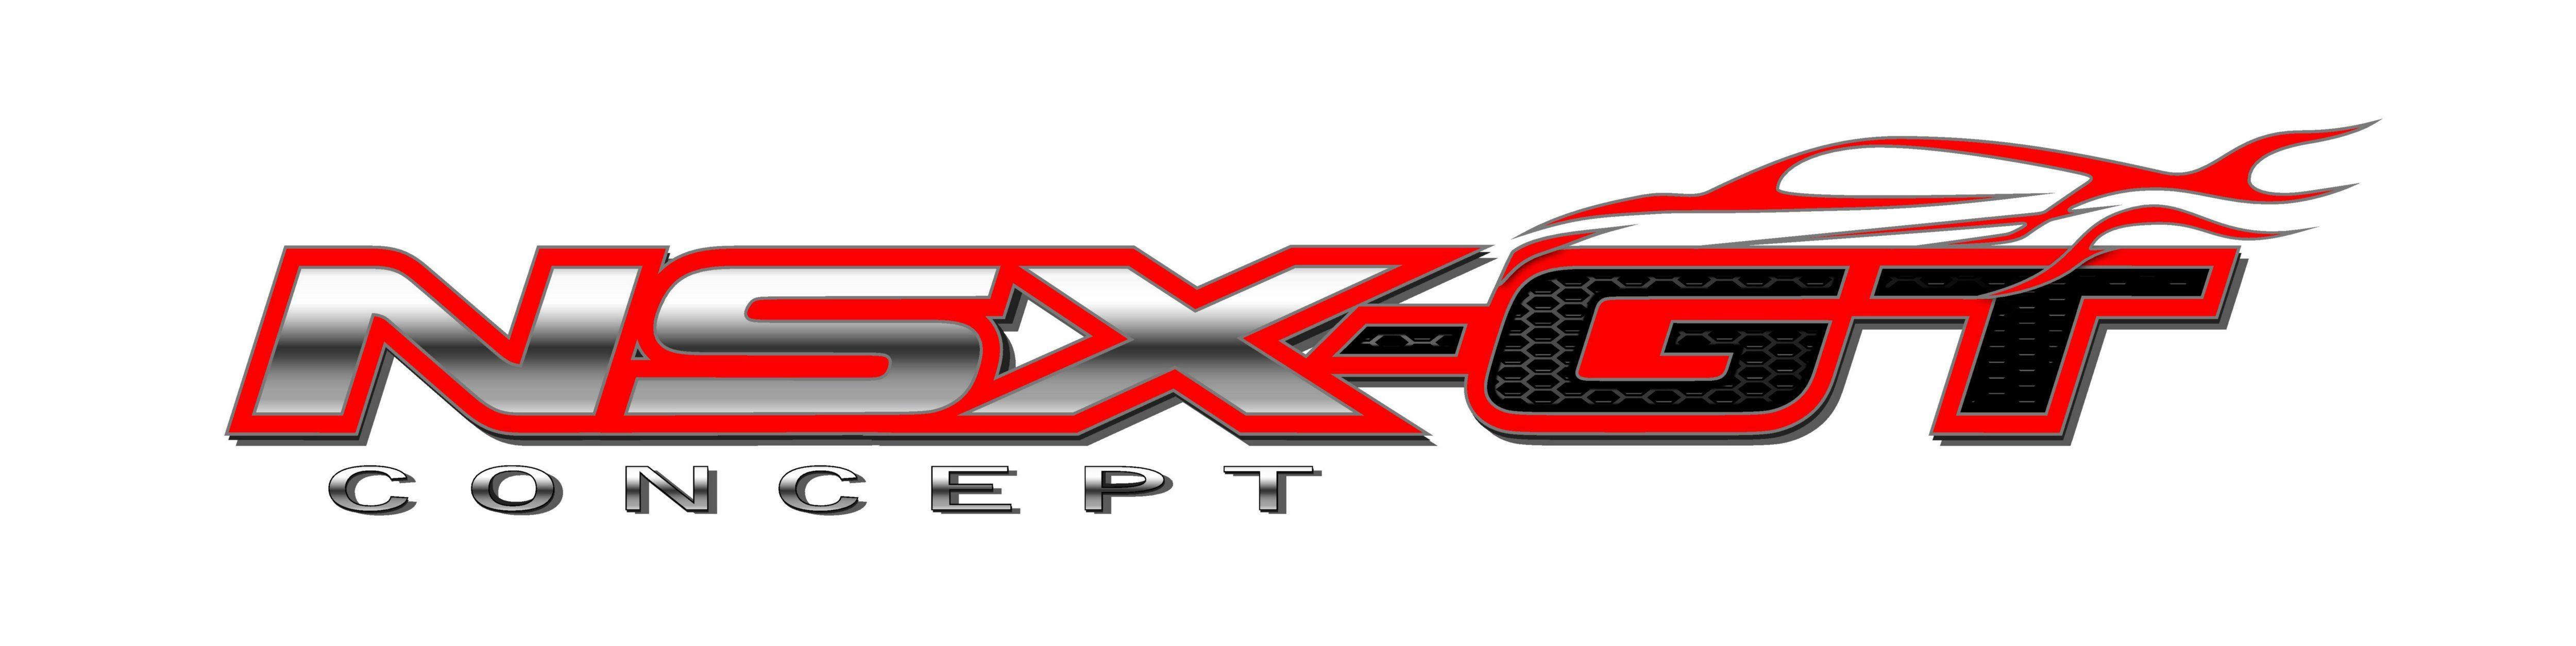 NSX Logo - Logo of Honda NSX Concept-GT - Picture Number: 617495